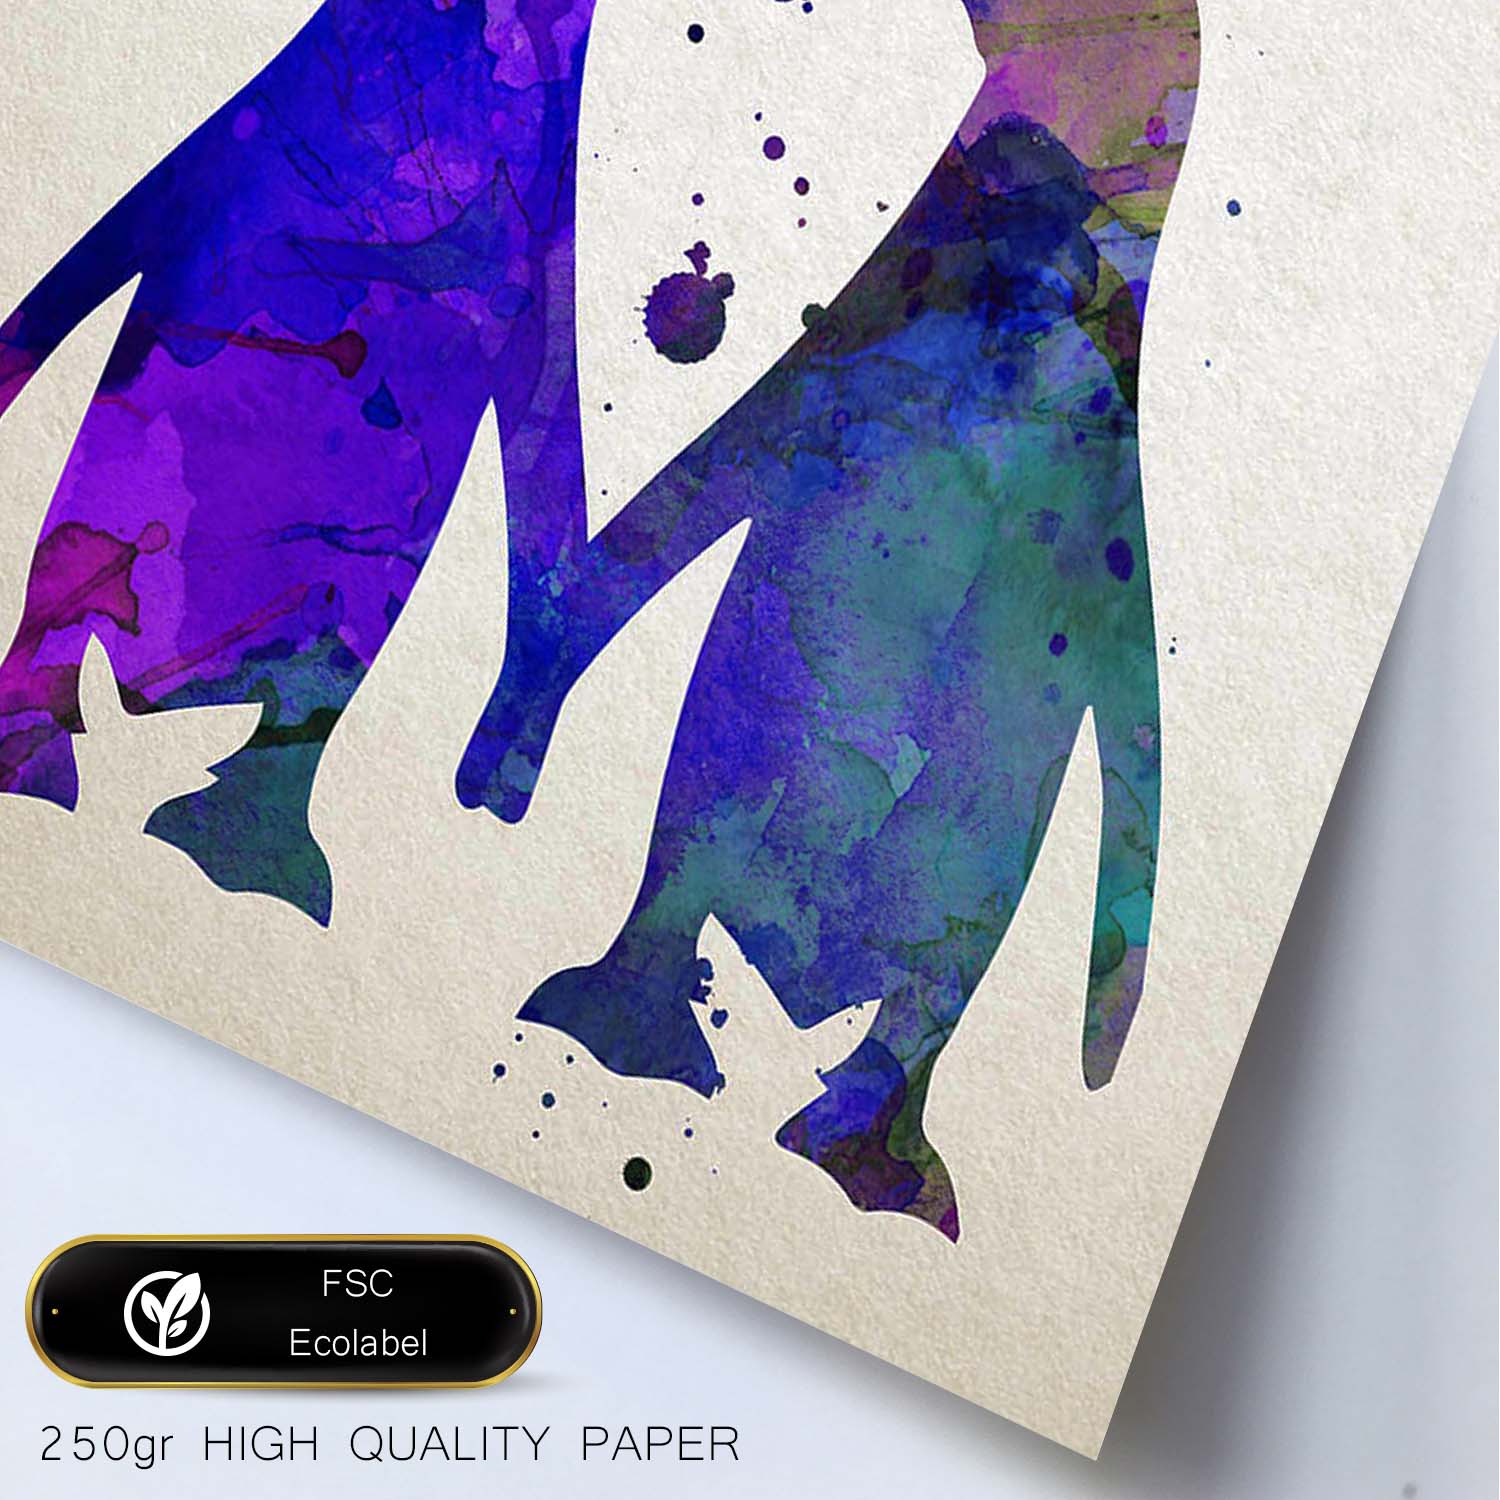 Poster de Pingüino estilo acuarela. Láminas de animales con estilo acuarela-Artwork-Nacnic-Nacnic Estudio SL